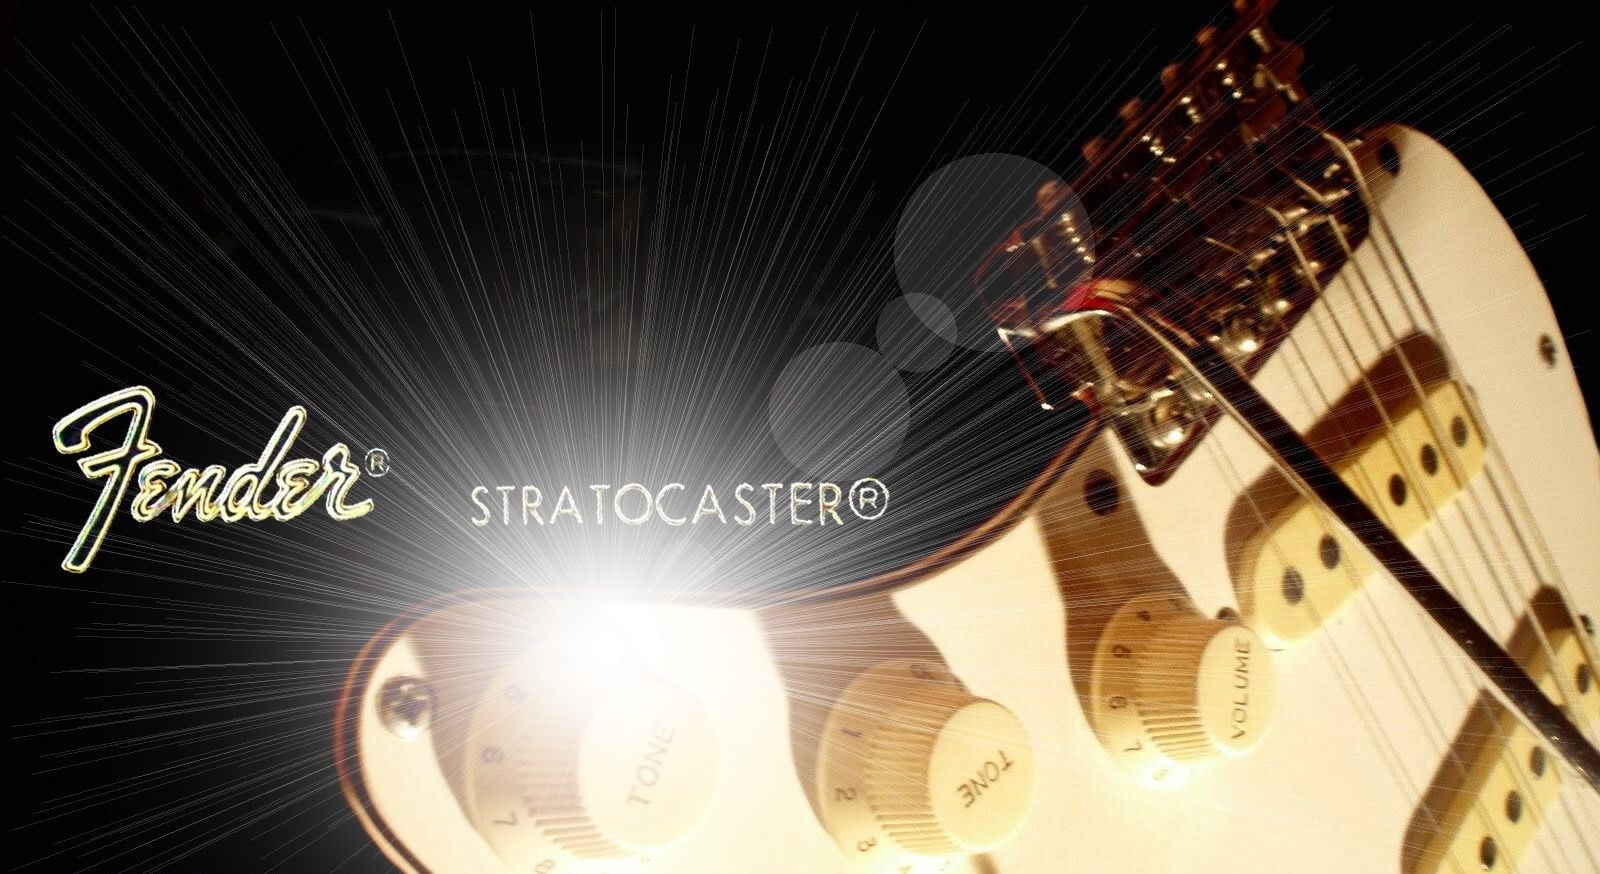 White And Black Fender Stratocaster, Guitar, Fender - Fender Stratocaster Desktop Background , HD Wallpaper & Backgrounds